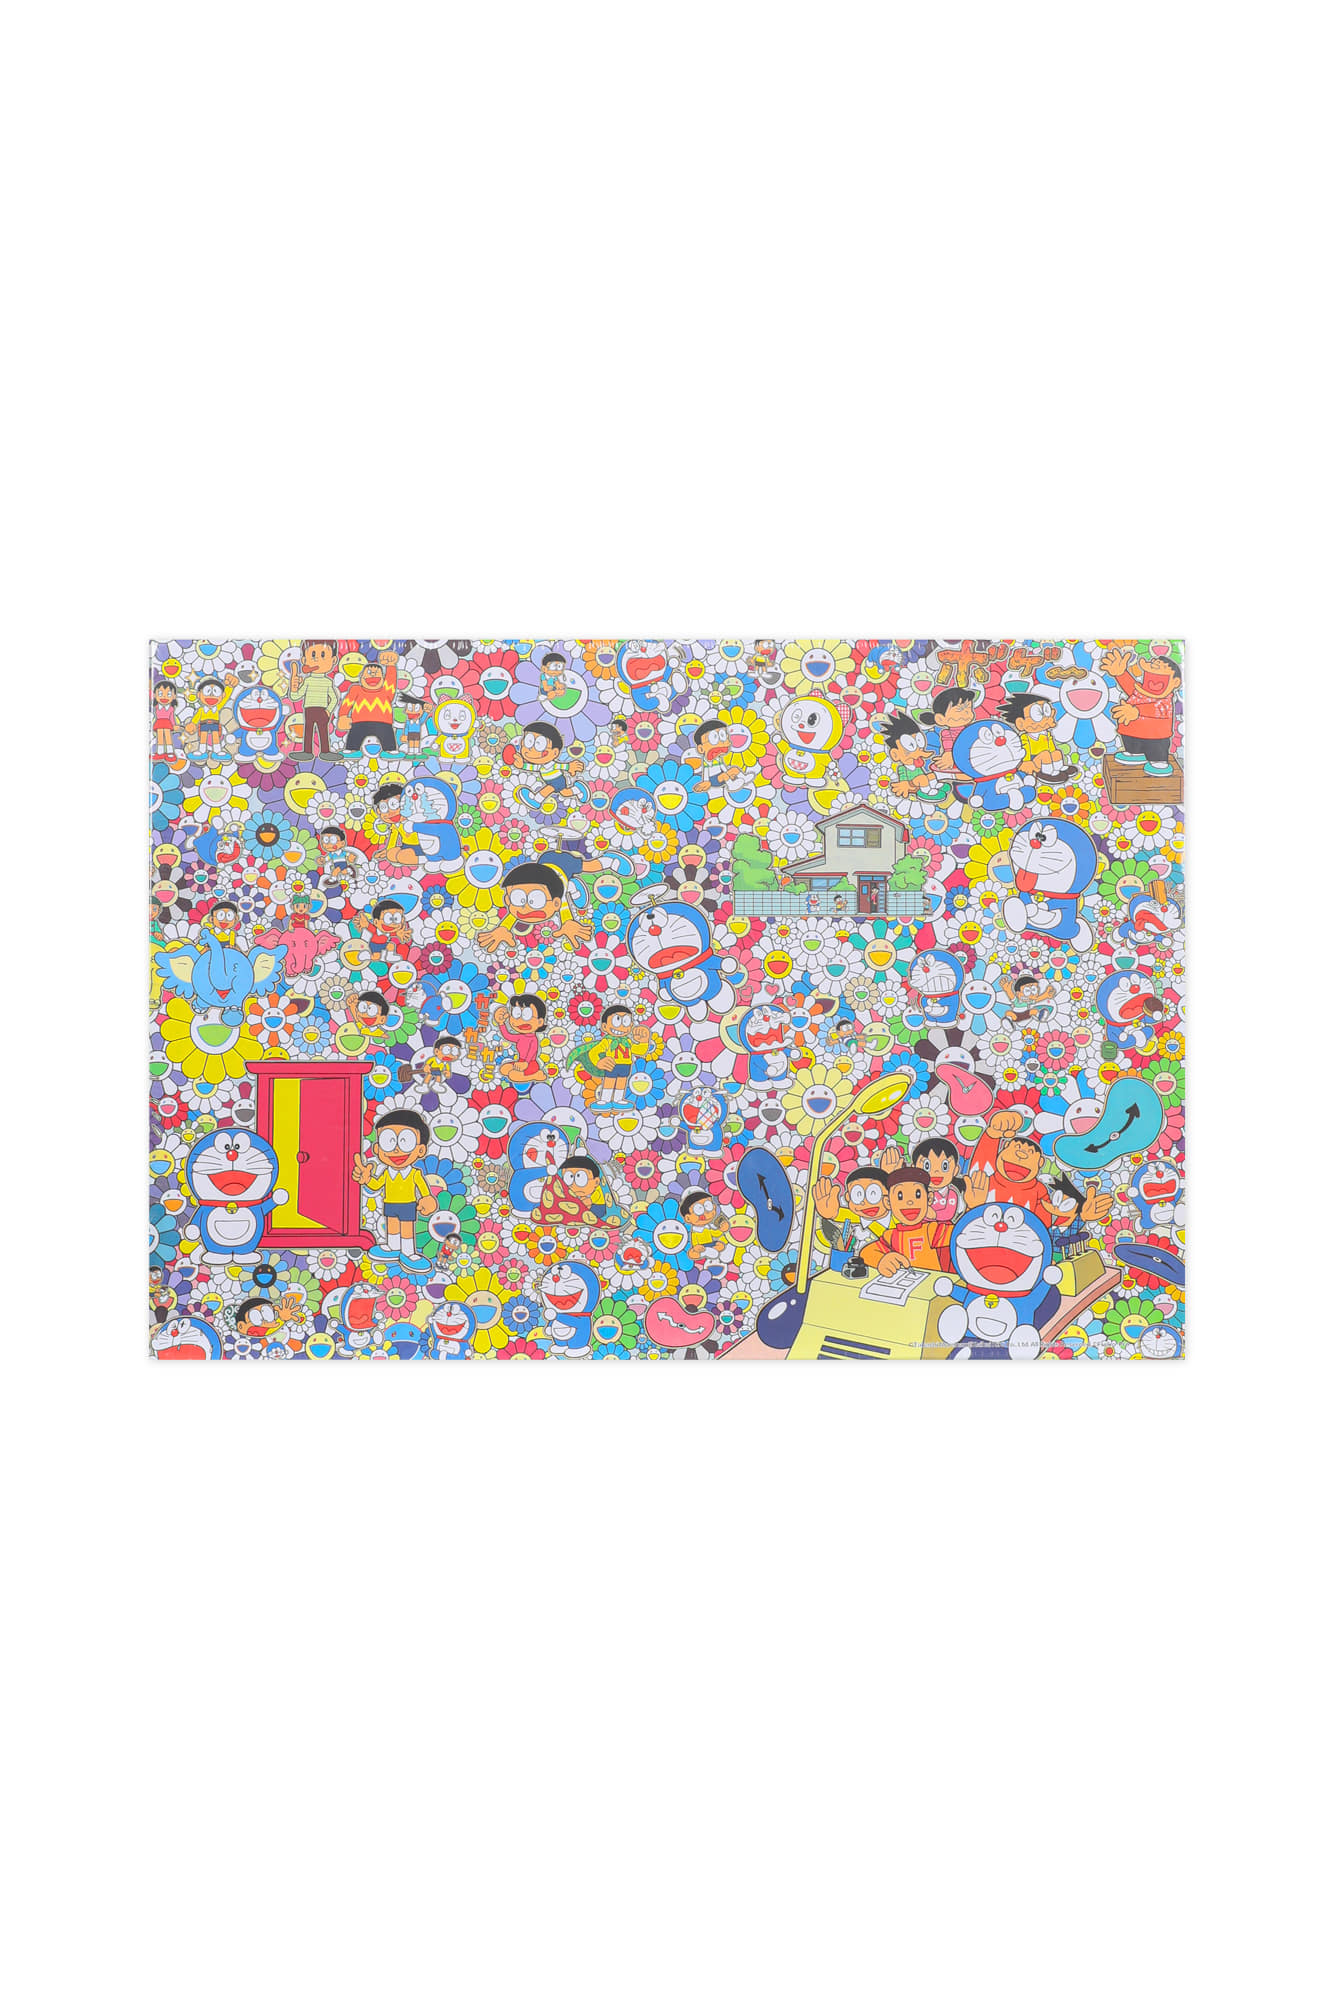 Takashi Murakami x Doraemon Jigsaw Puzzle (1,000 Pieces)